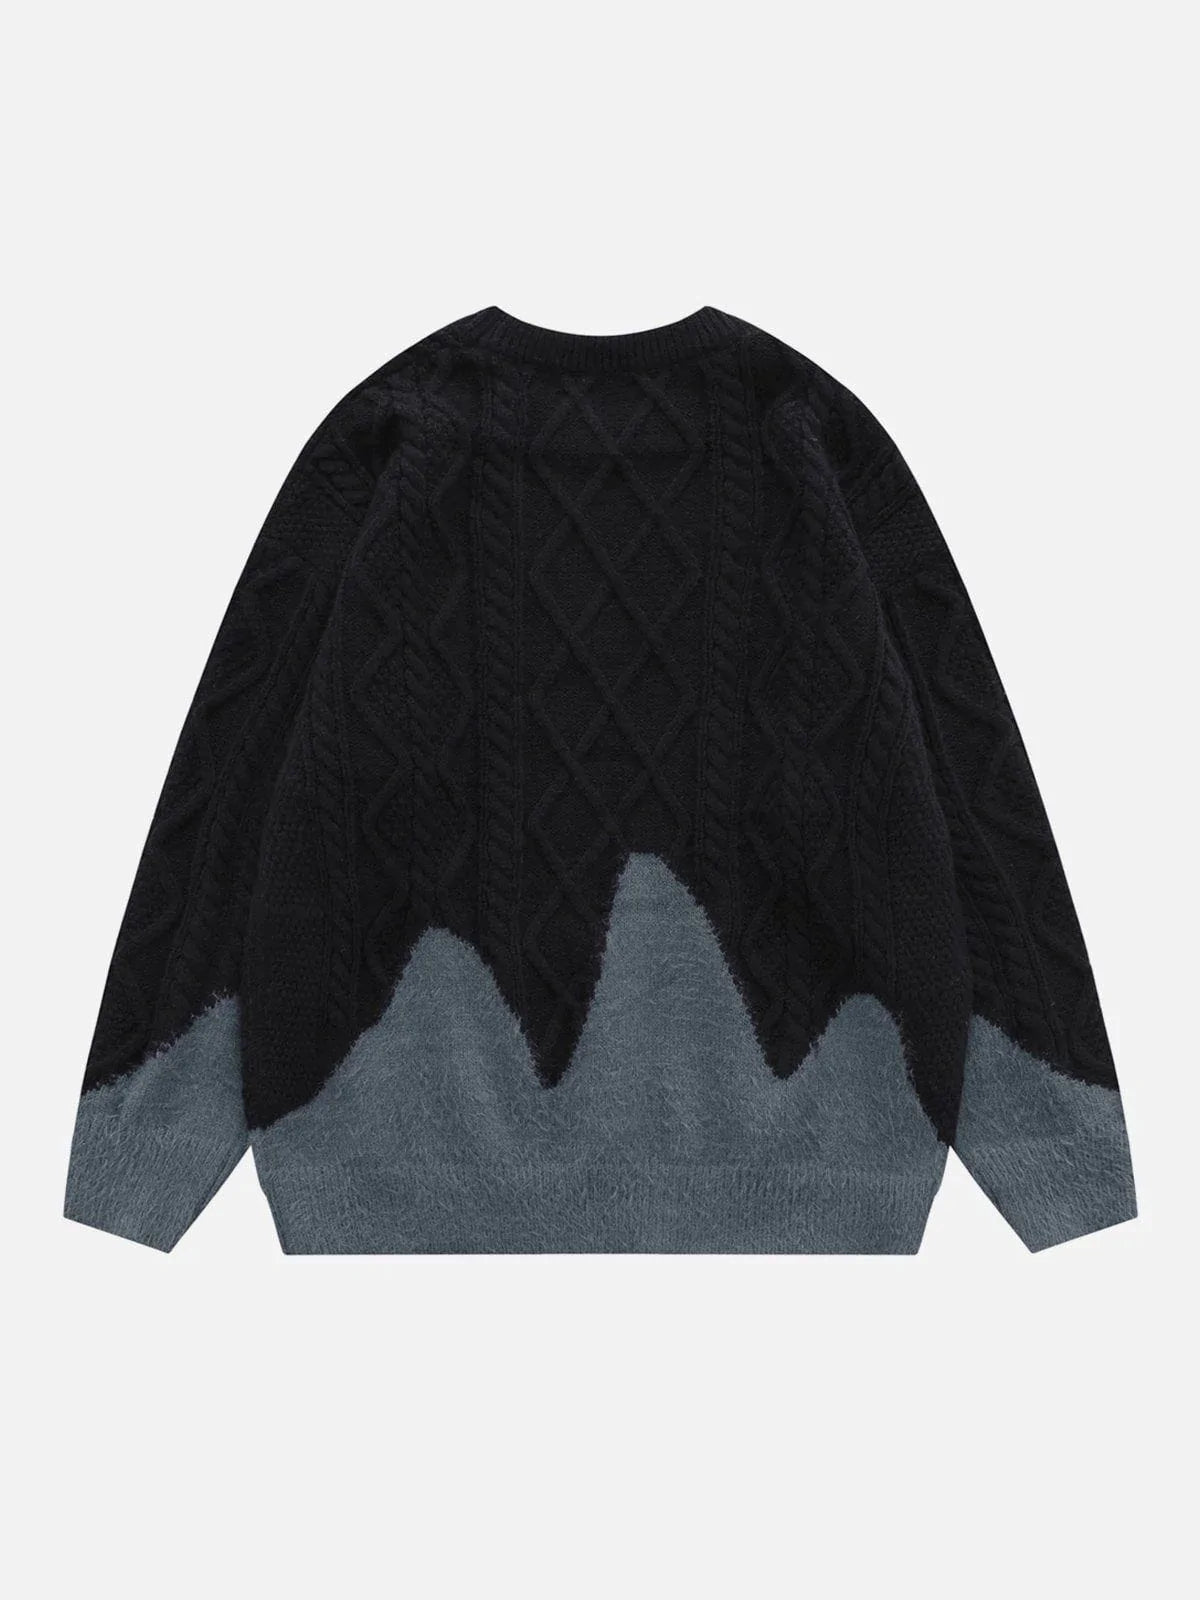 Majesda® - Vintage Colorblock Sweater outfit ideas streetwear fashion